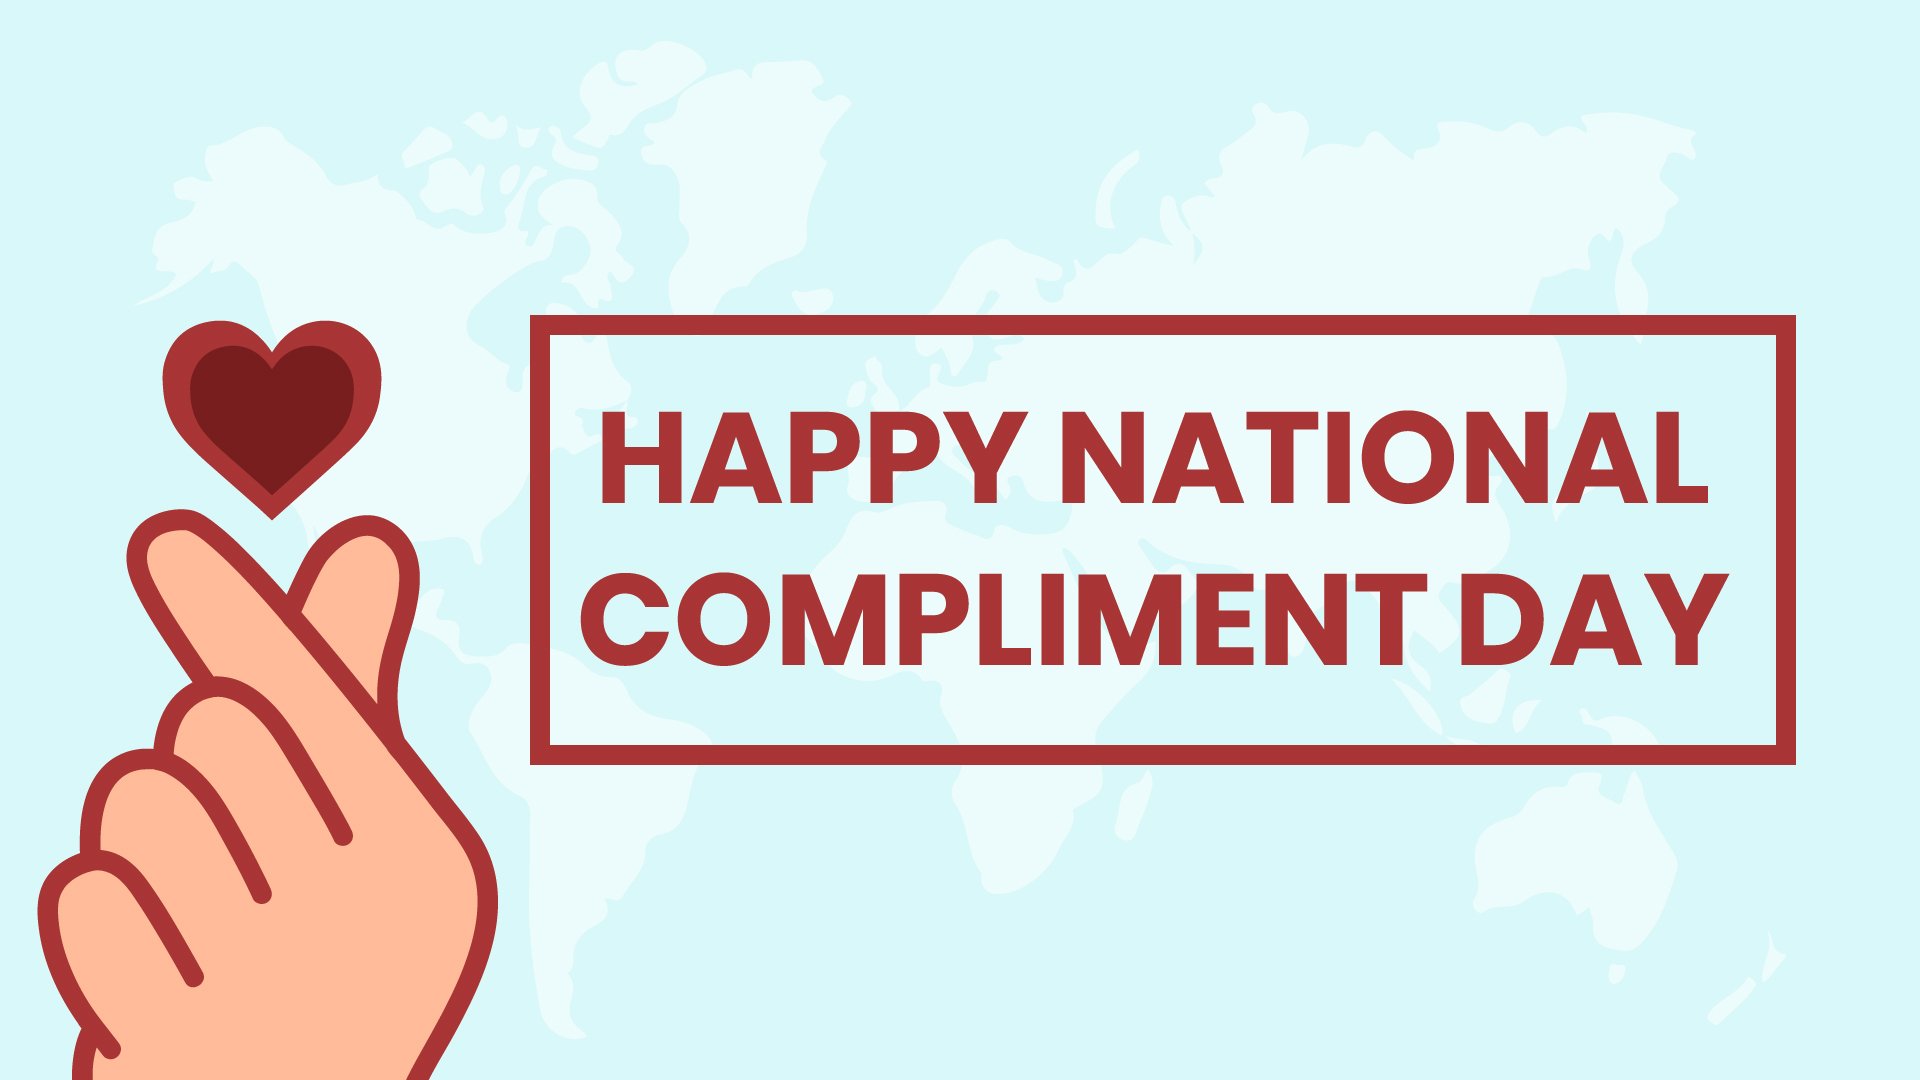 National Compliment Day Background in PDF, Illustrator, PSD, EPS, SVG, JPG, PNG